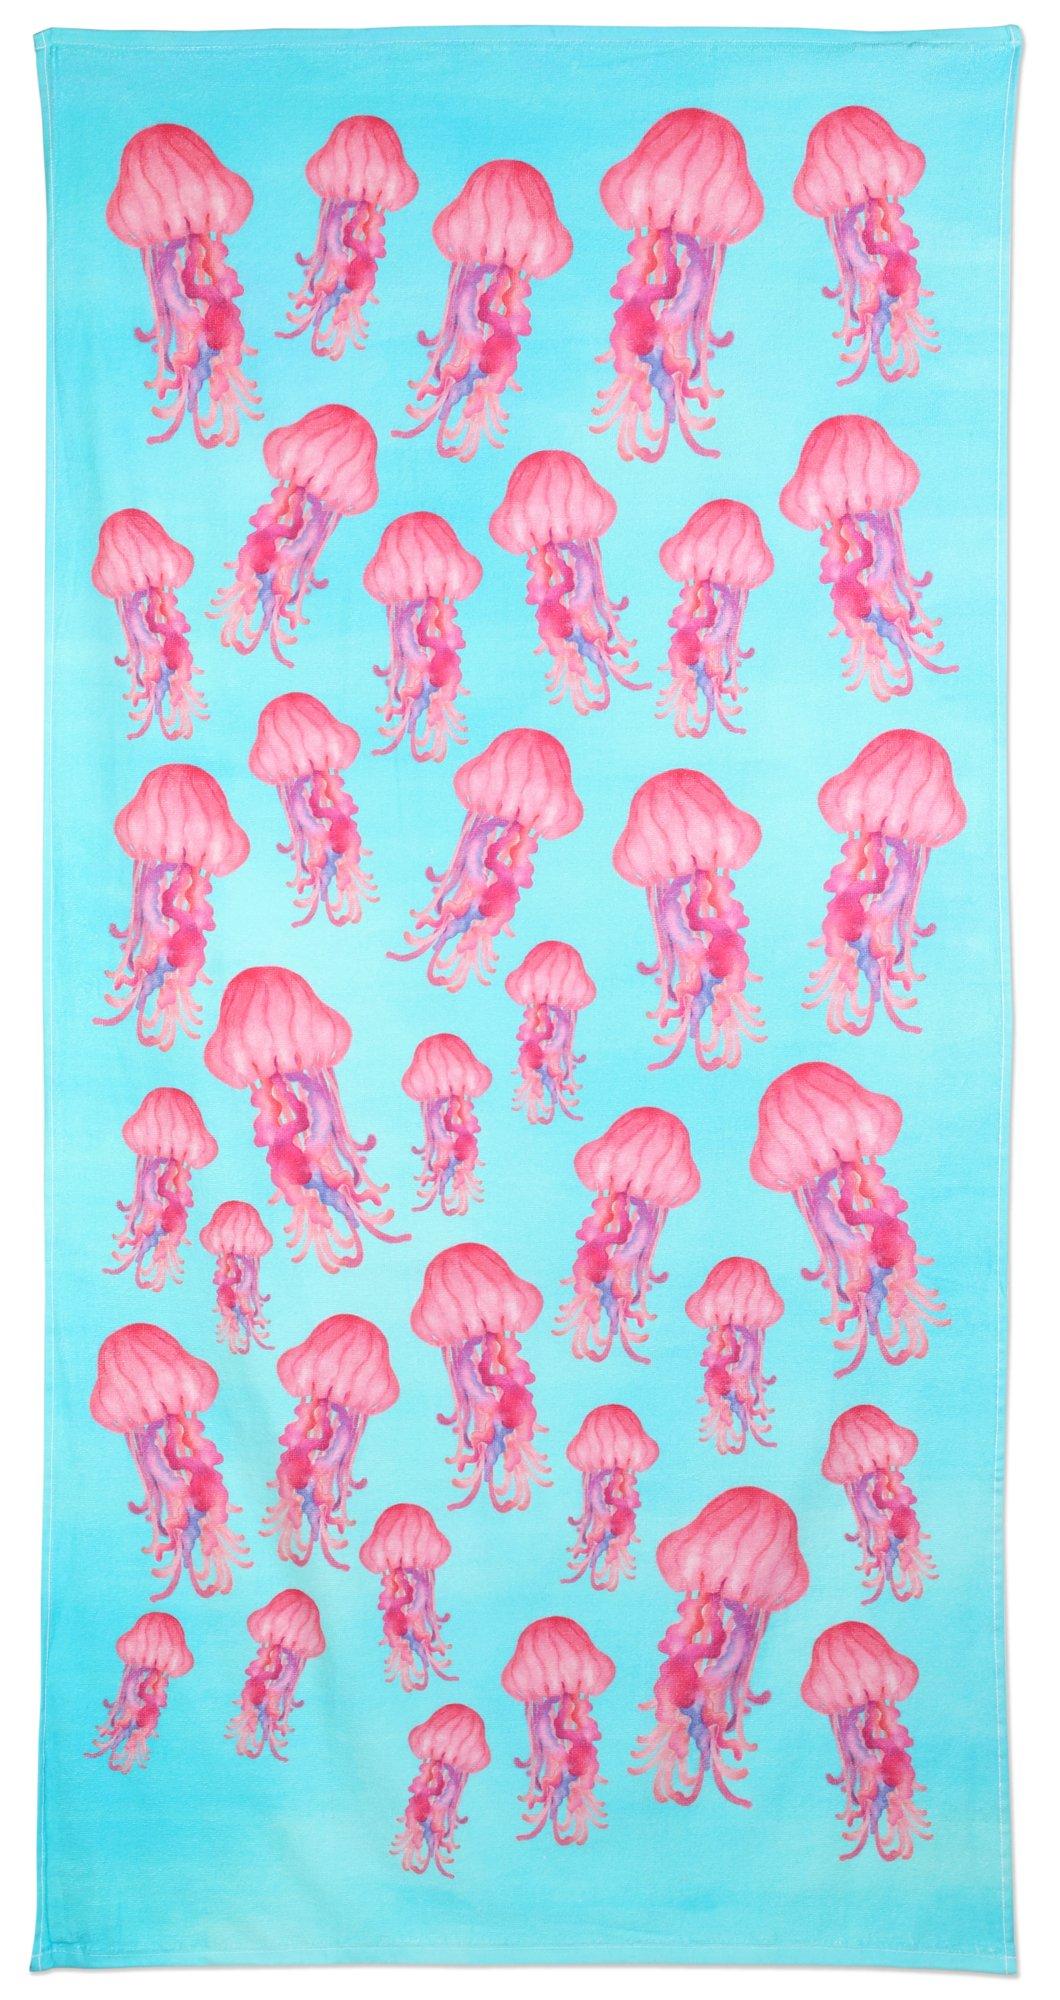 Kaufman 30x60 Jellyfish Print Beach Towel